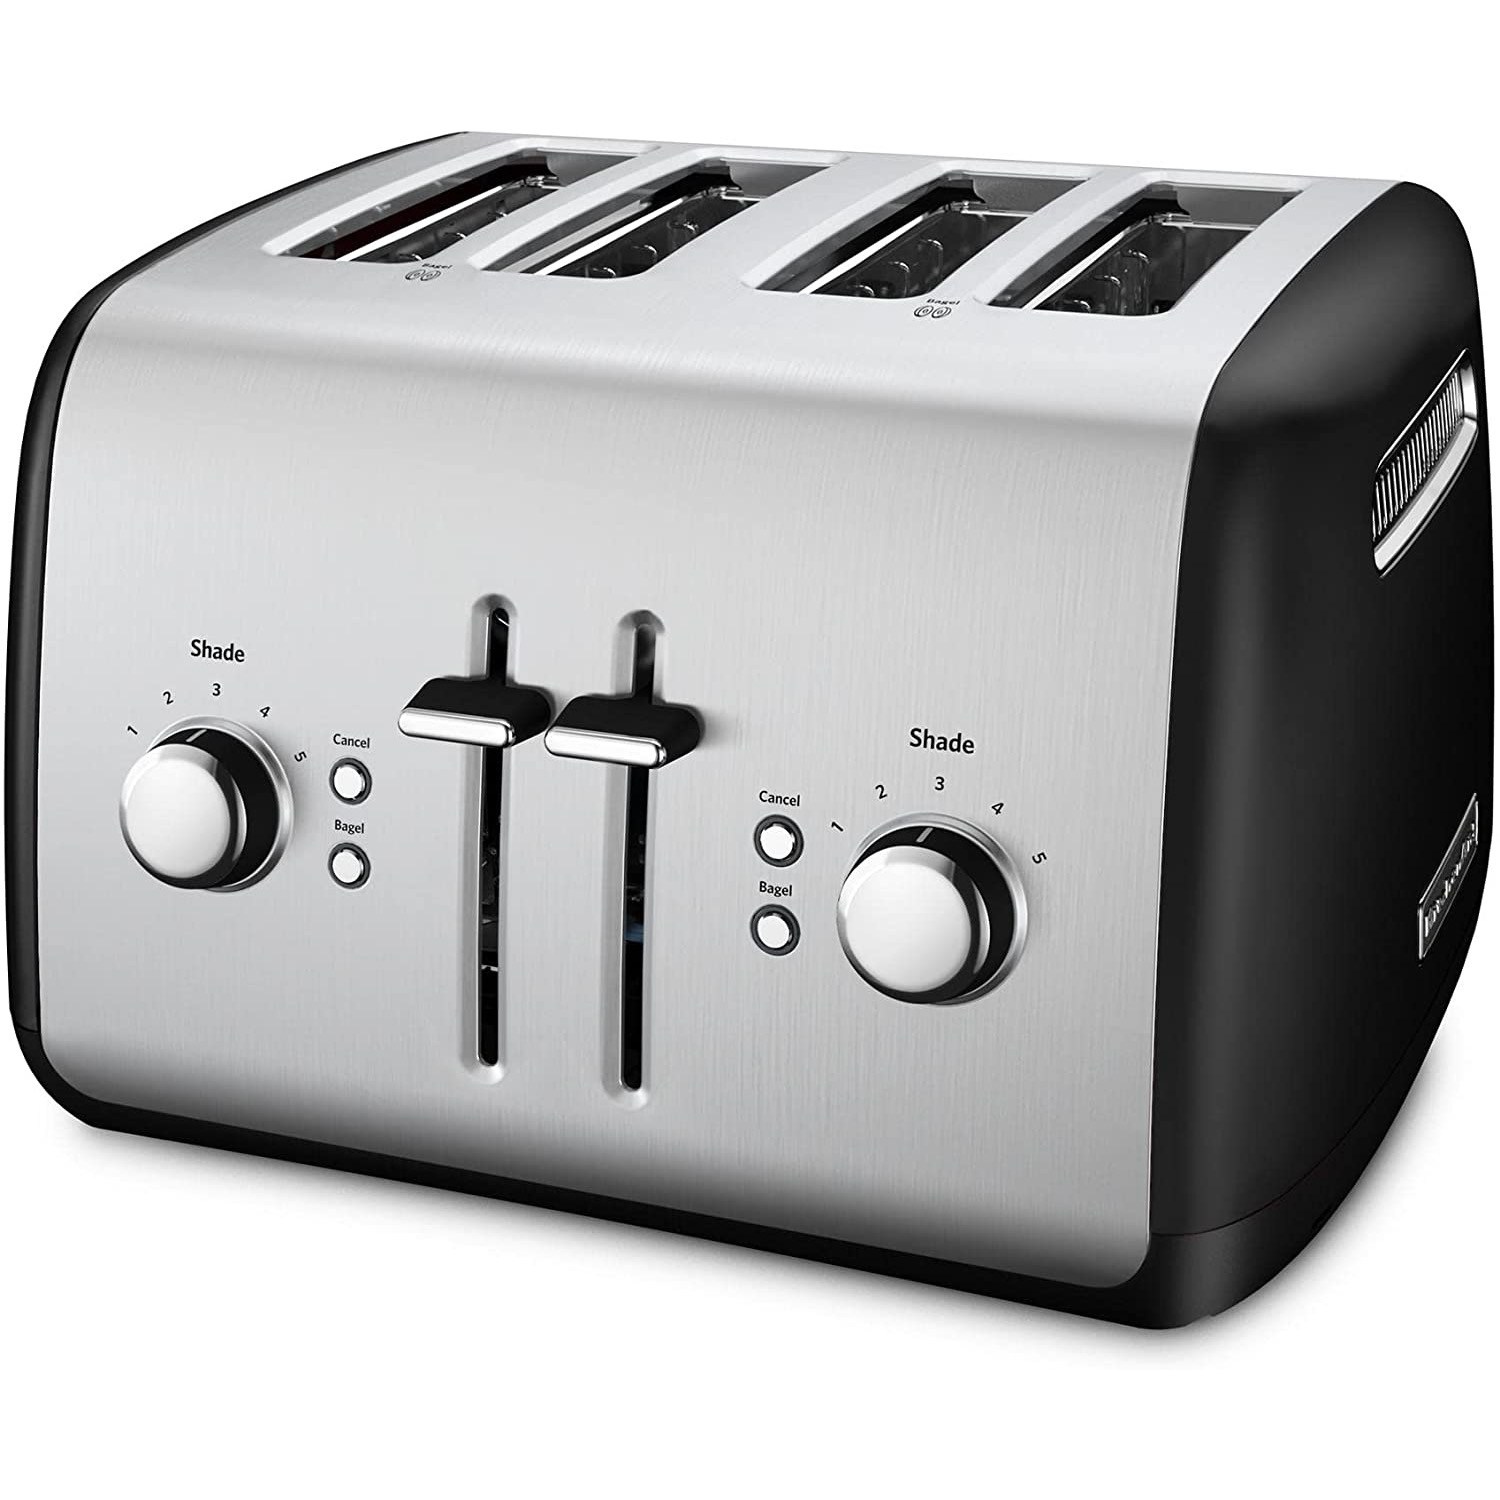 https://cdn.bestreviews.com/images/v4desktop/product-matrix/best-toasters-kitchenaid-4slice-manual-24c4ee.jpg